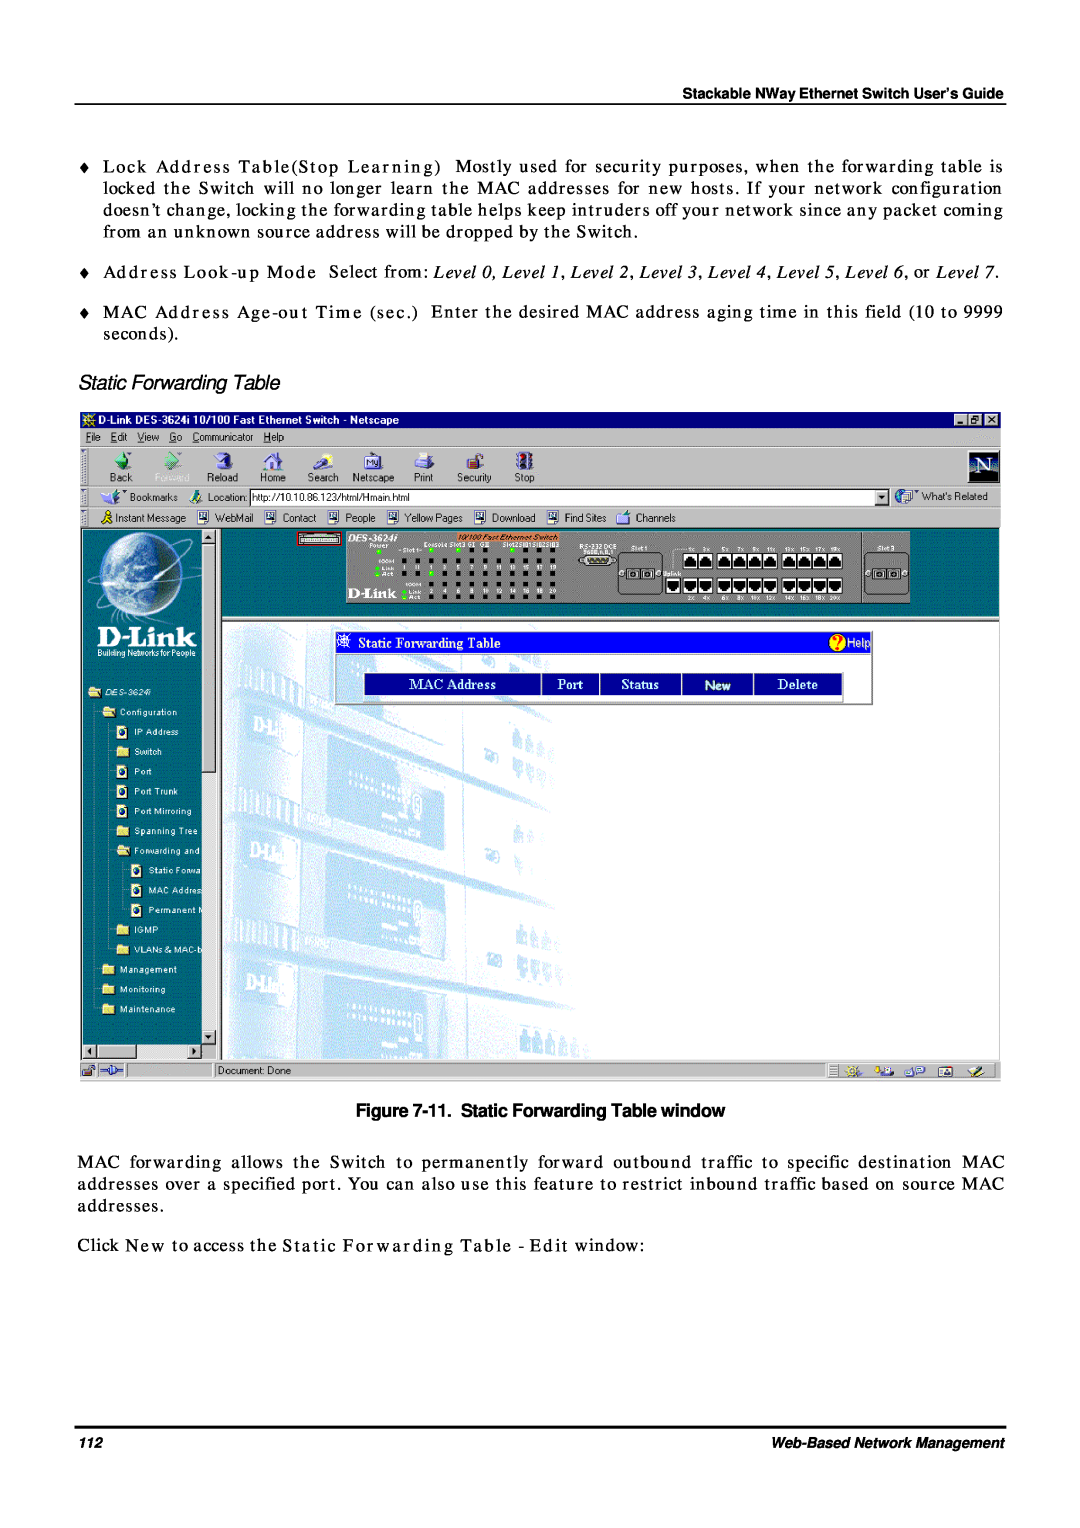 D-Link DES-3624 11. Static Forwarding Table window, Click New to access the Static Forwarding Table - Edit window 